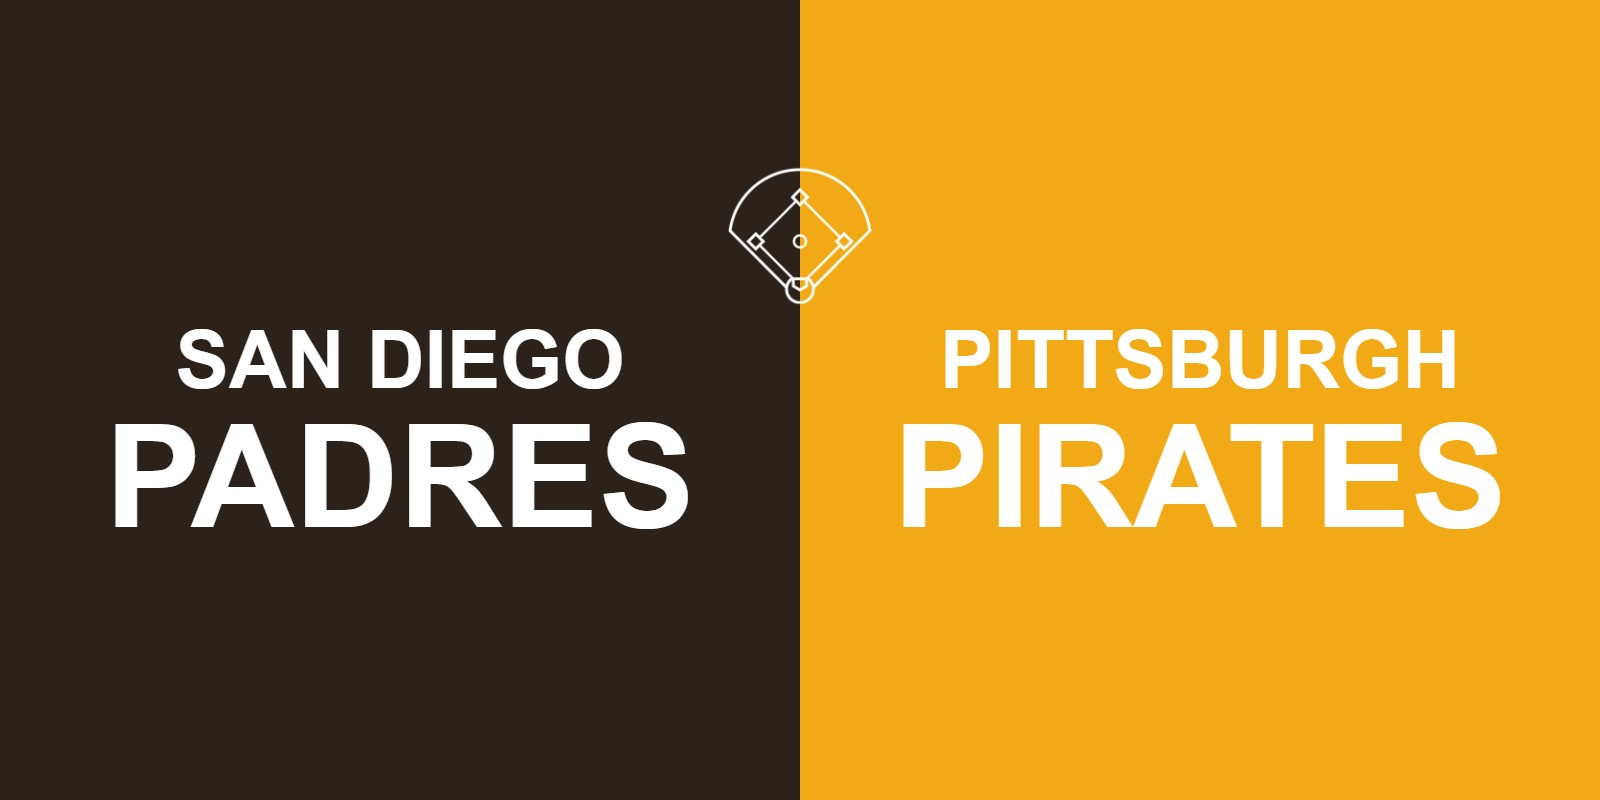 Padres vs Pirates